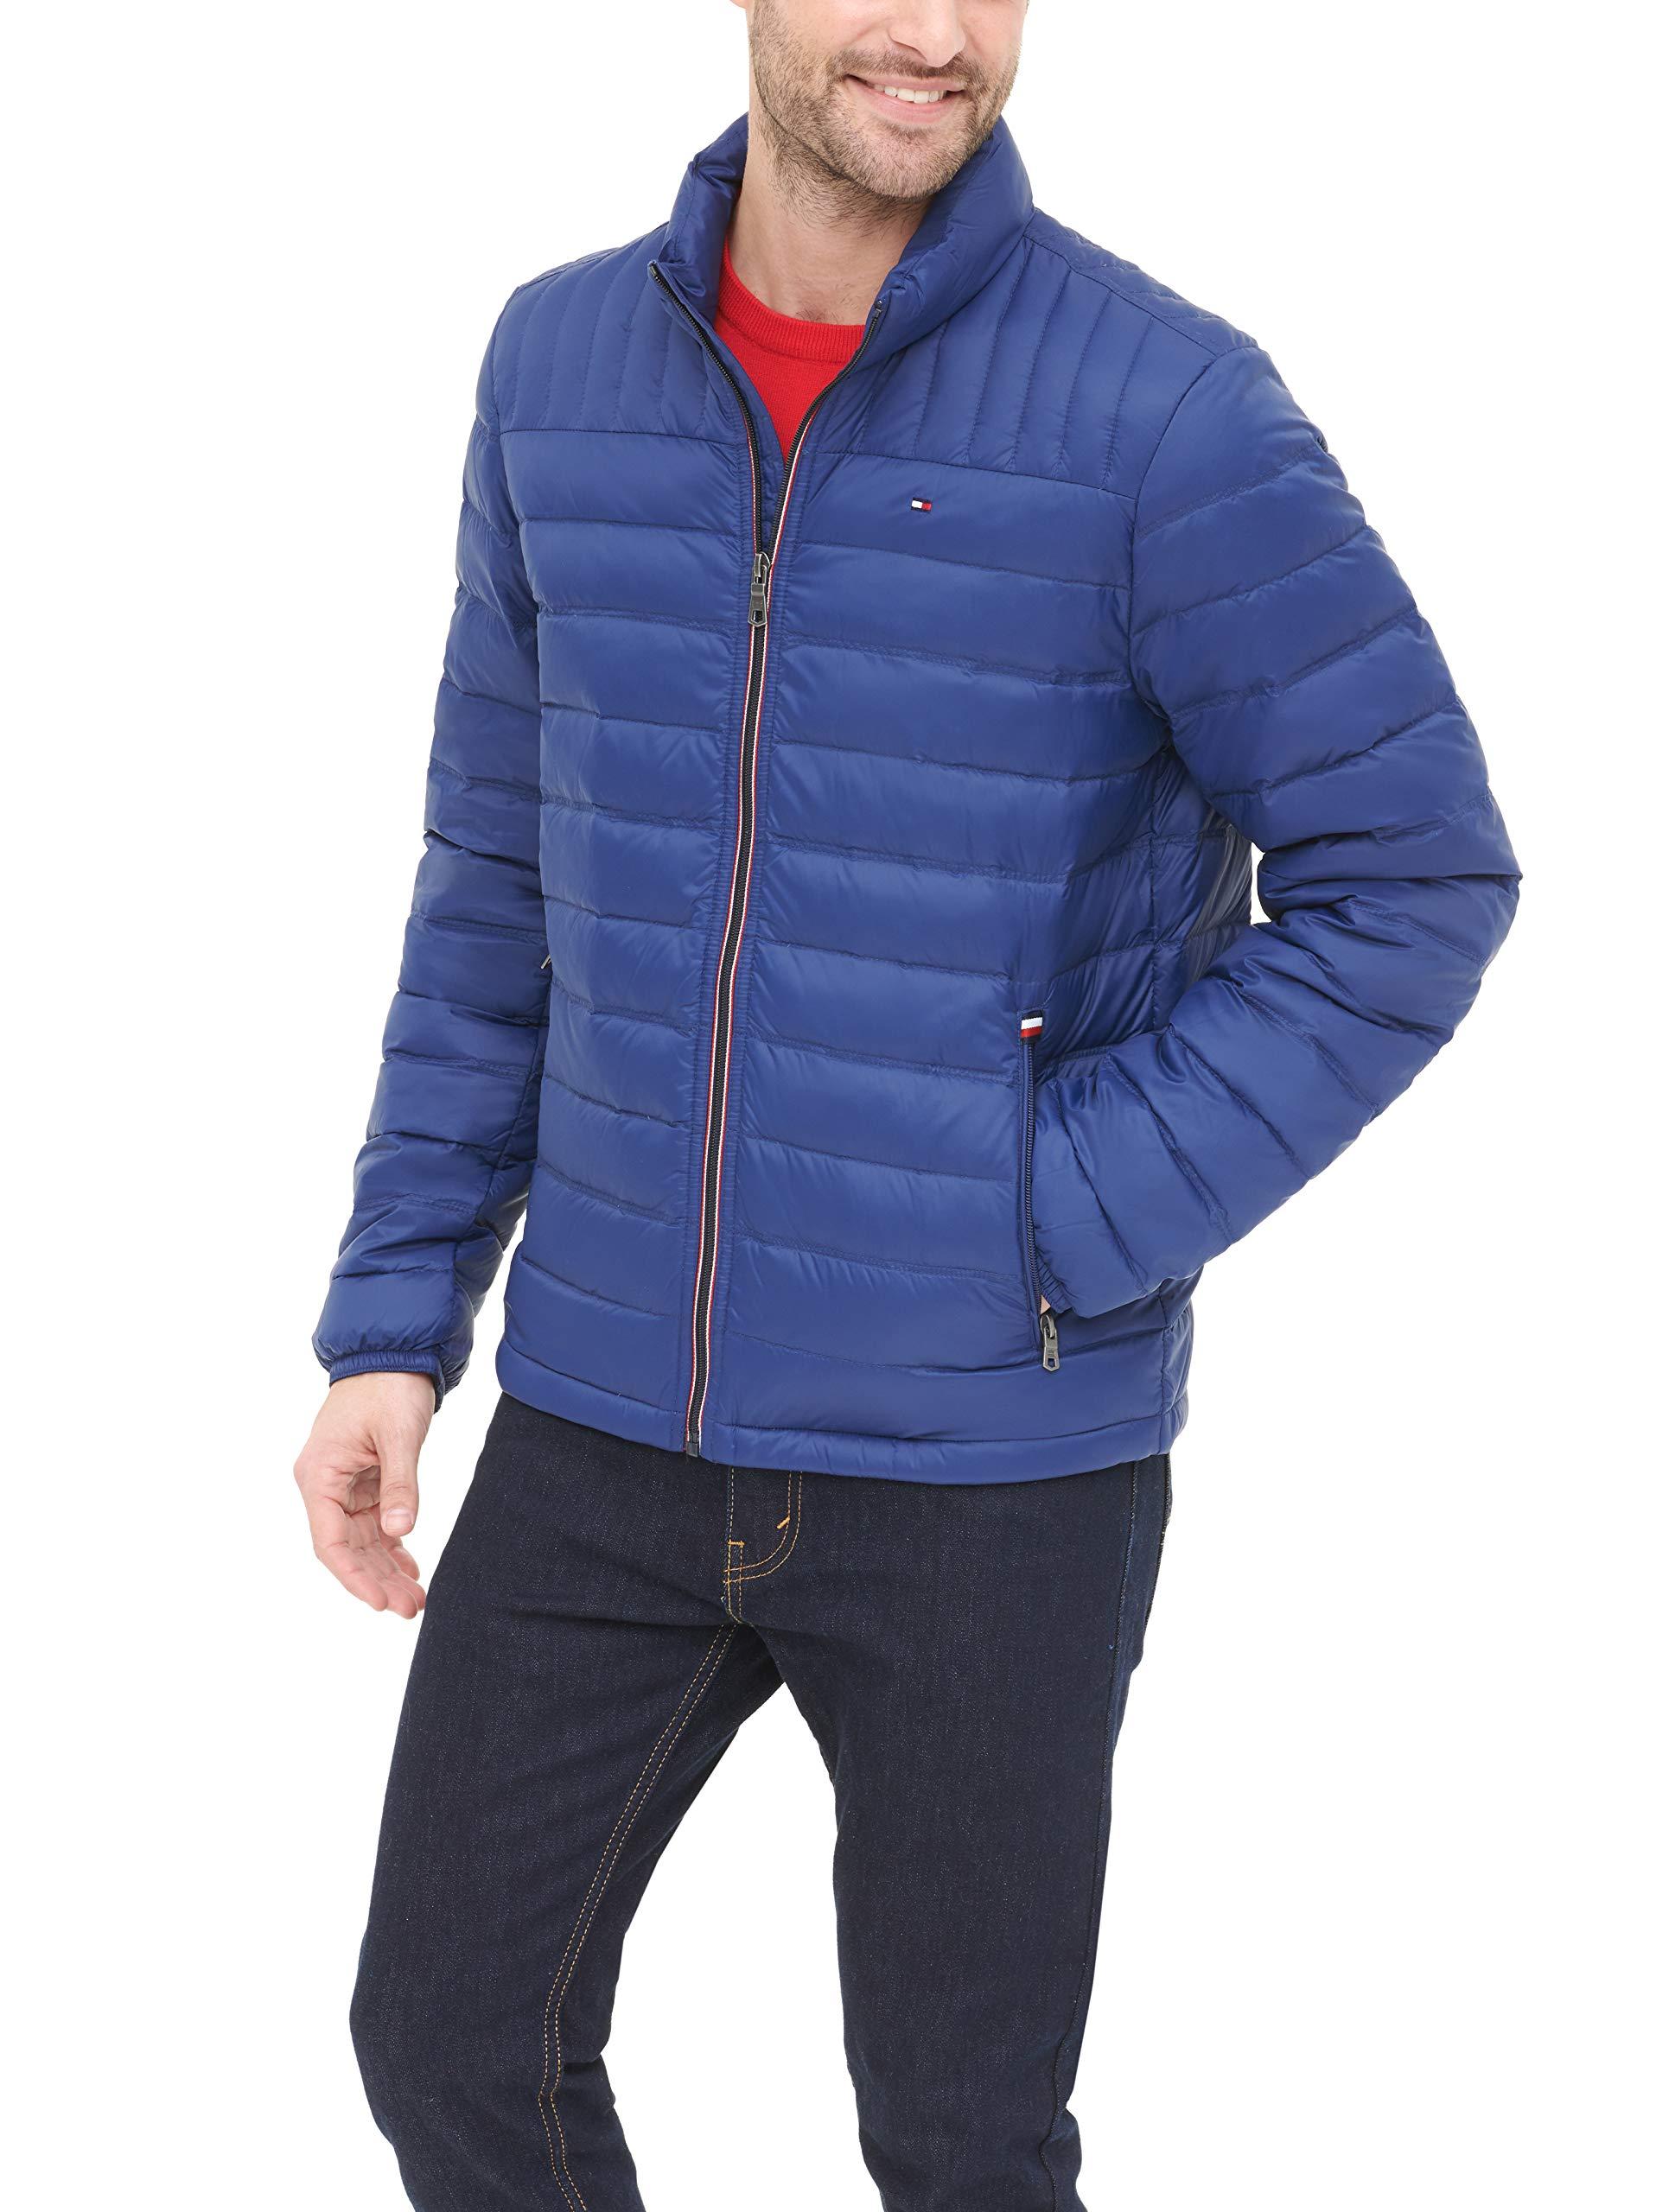 Tommy Hilfiger Synthetic Ultra Loft Packable Puffer Jacket in Deep Blue  (Blue) for Men - Lyst